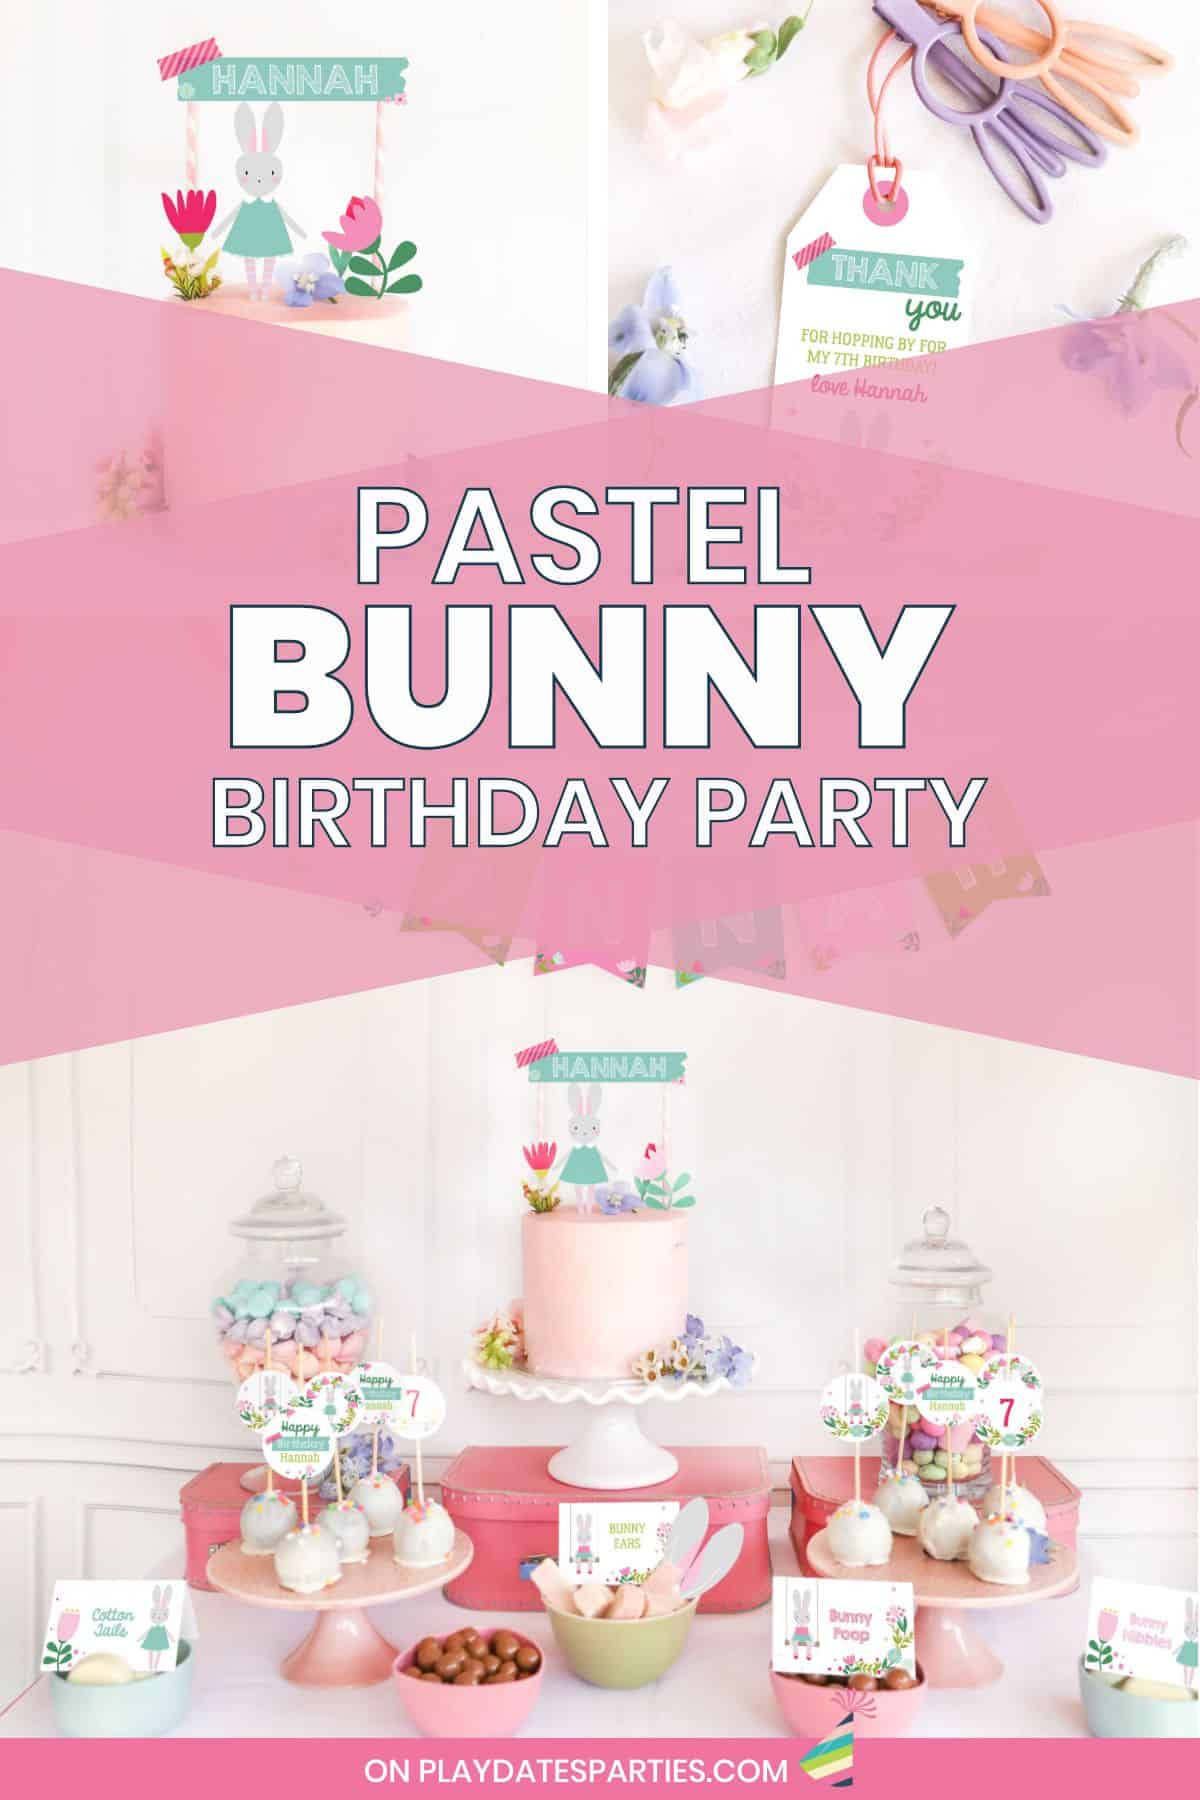 Pastel bunny birthday party.